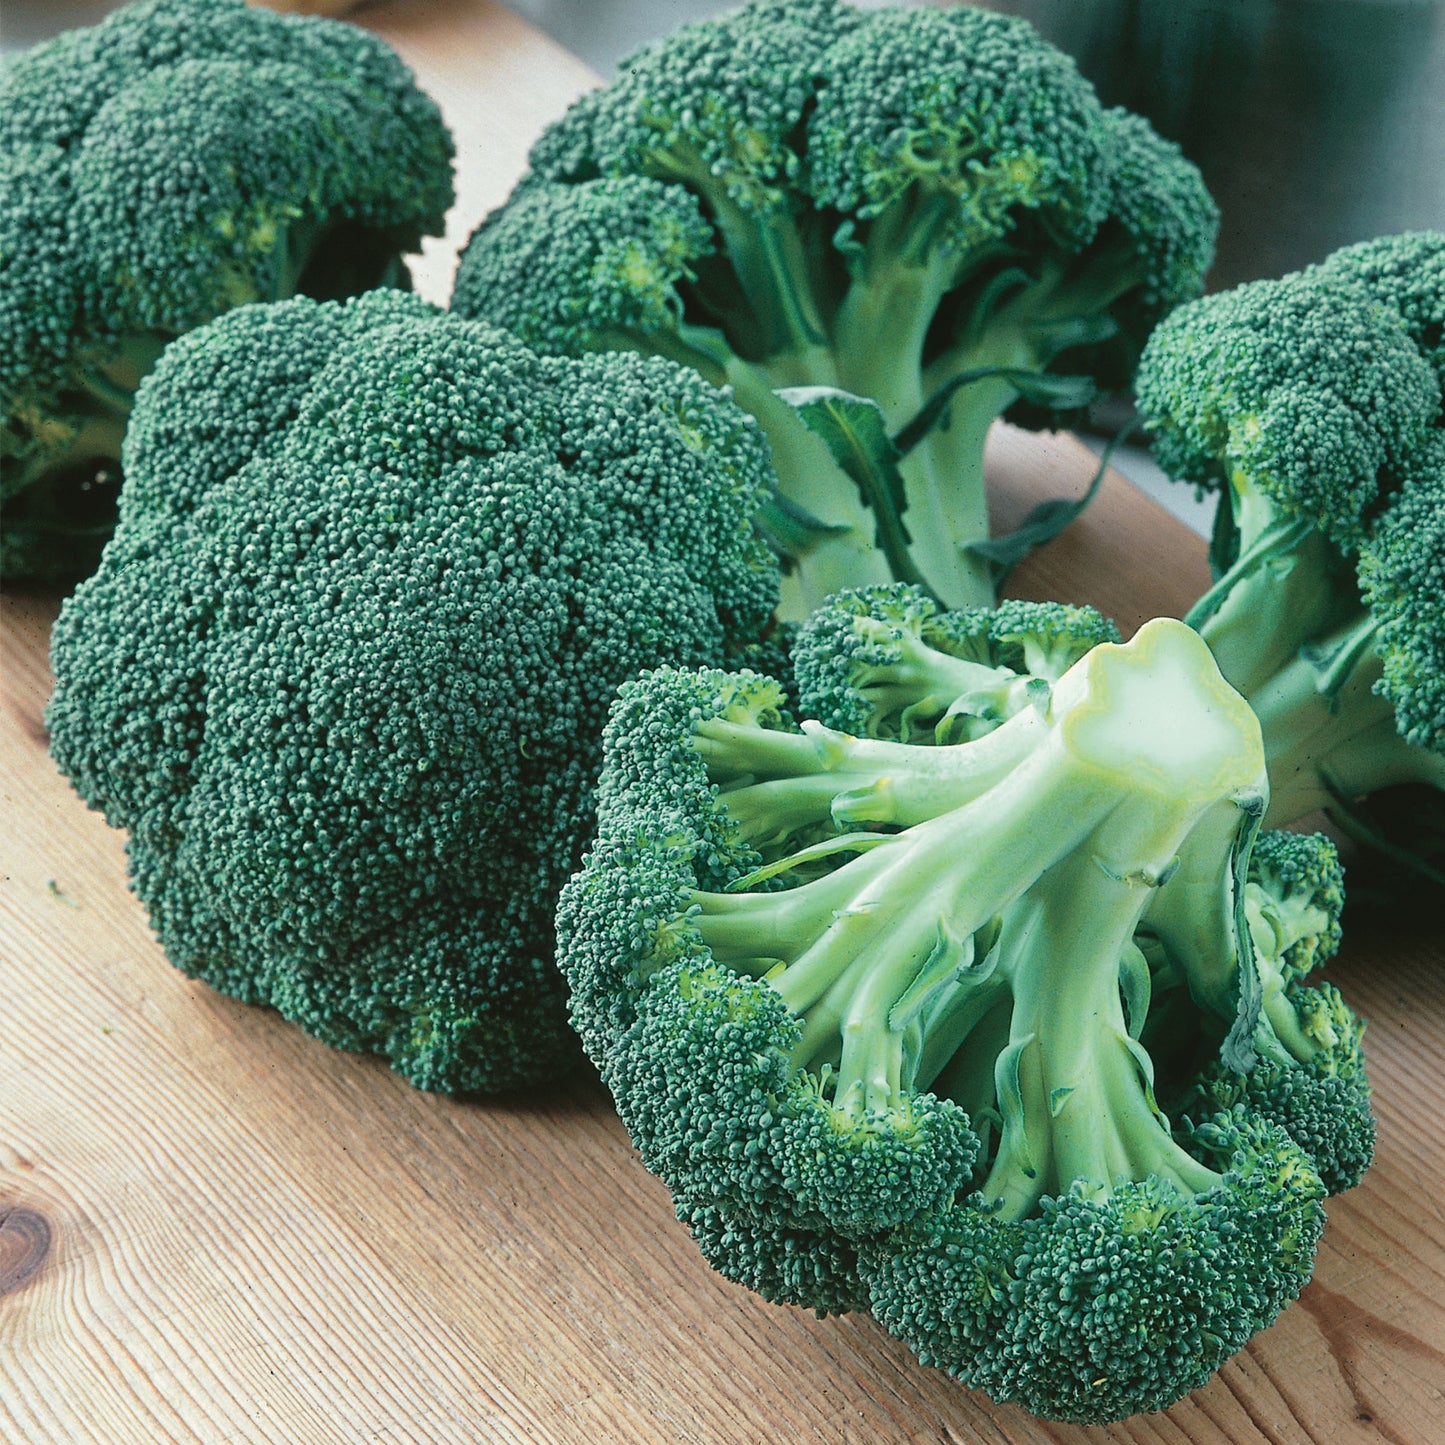 Unwins Calabrese Broccoli Green Magic F1 Seeds - lifestyle